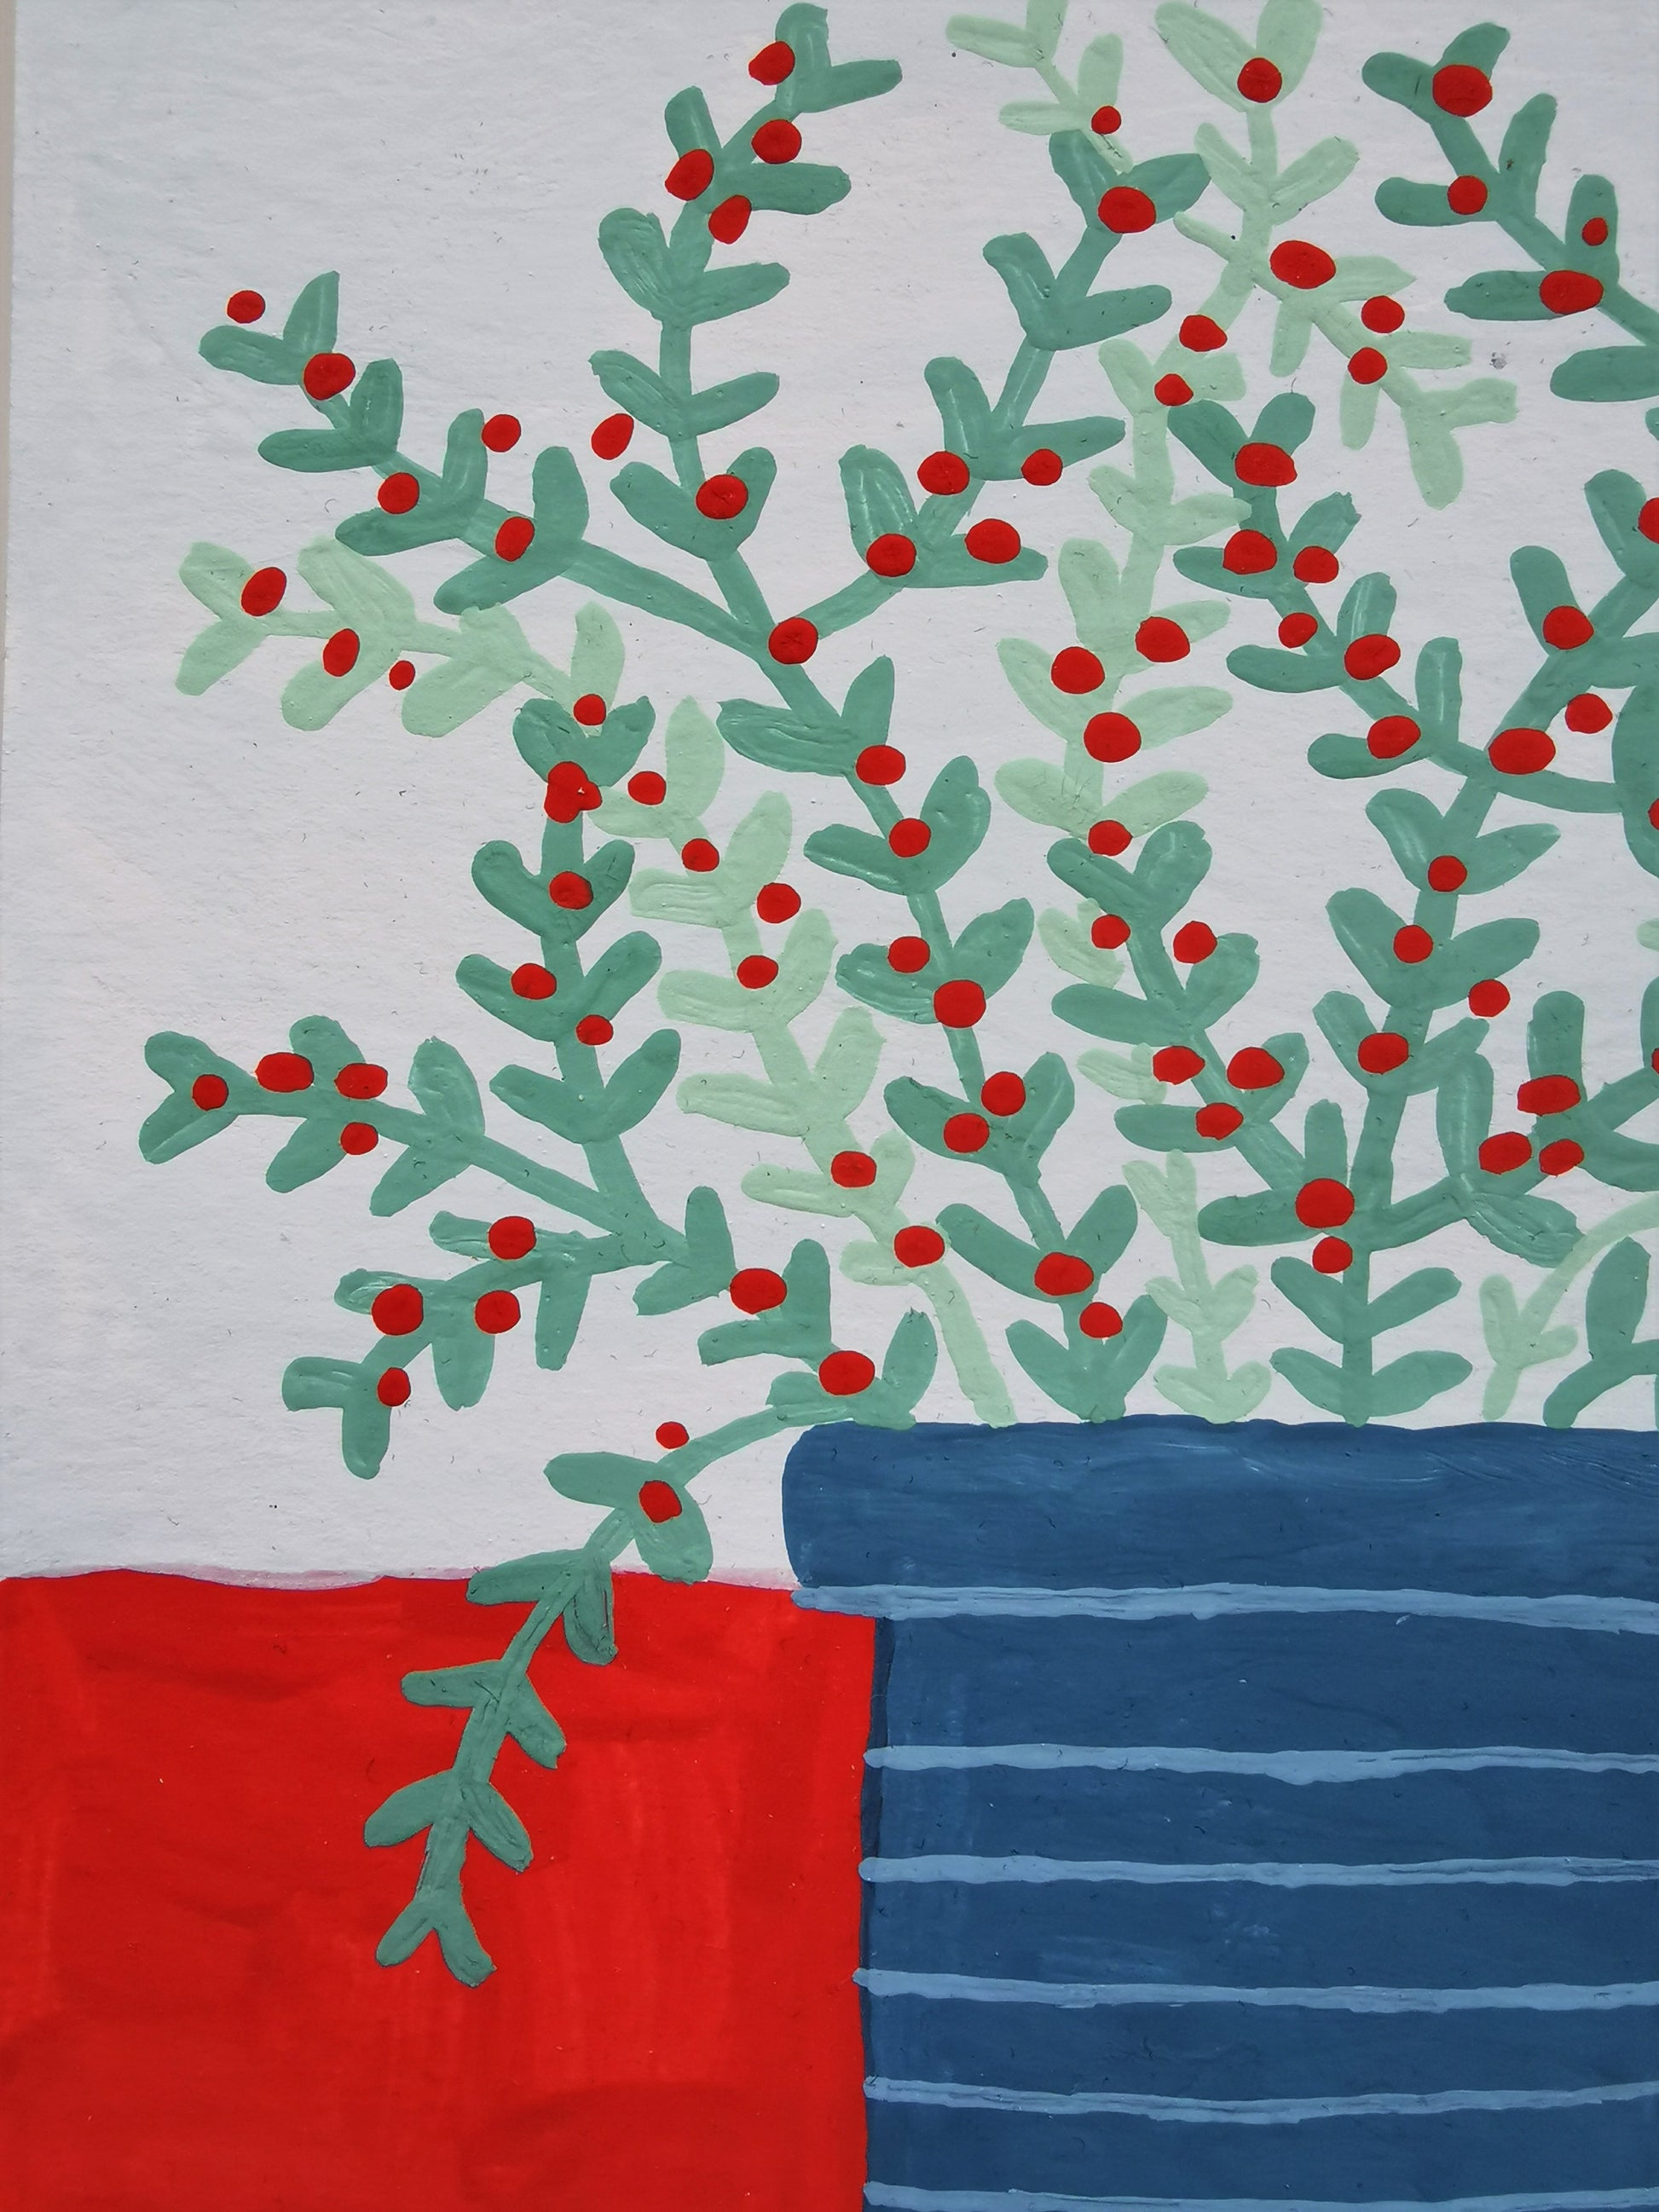 Potteplante på rødt bord - Originalt gouache-maleri på akvarelpapir inklusiv egetræsramme (A5: 14.8 x 21 cm) Nymaane